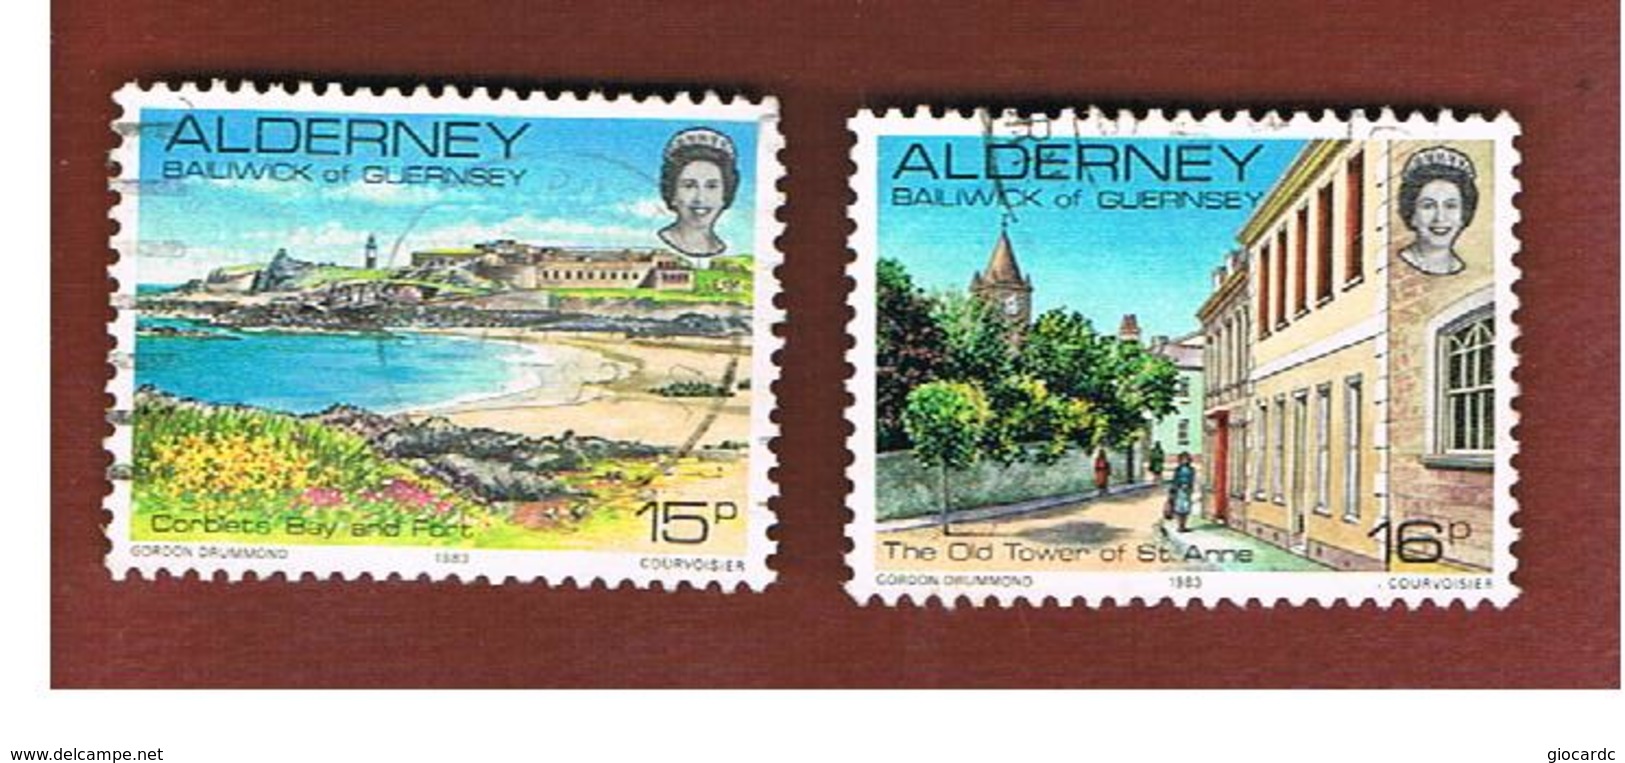 ALDERNEY  -  SG A9.10 - 1983  ISLAND SCENES (2 DIFFERENT STAMPS OF THE CURRENT SERIE)  -   USED - Alderney